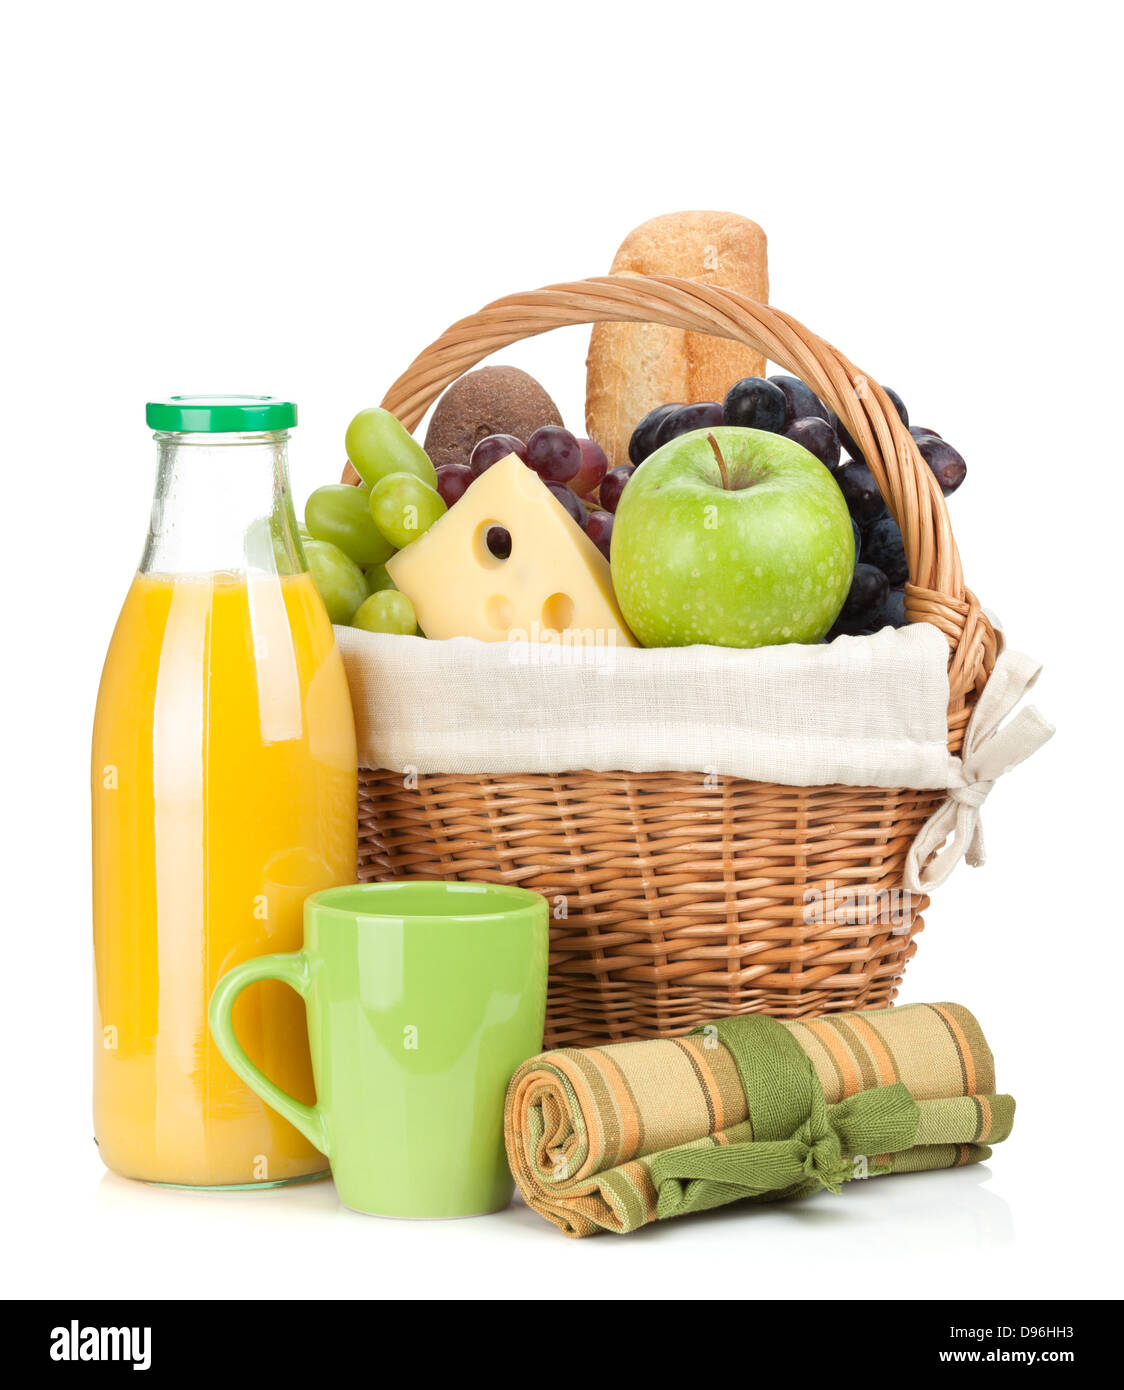 Picnic basket with bread, fruits and orange juice bottle. Isolated on white background Stock Photo